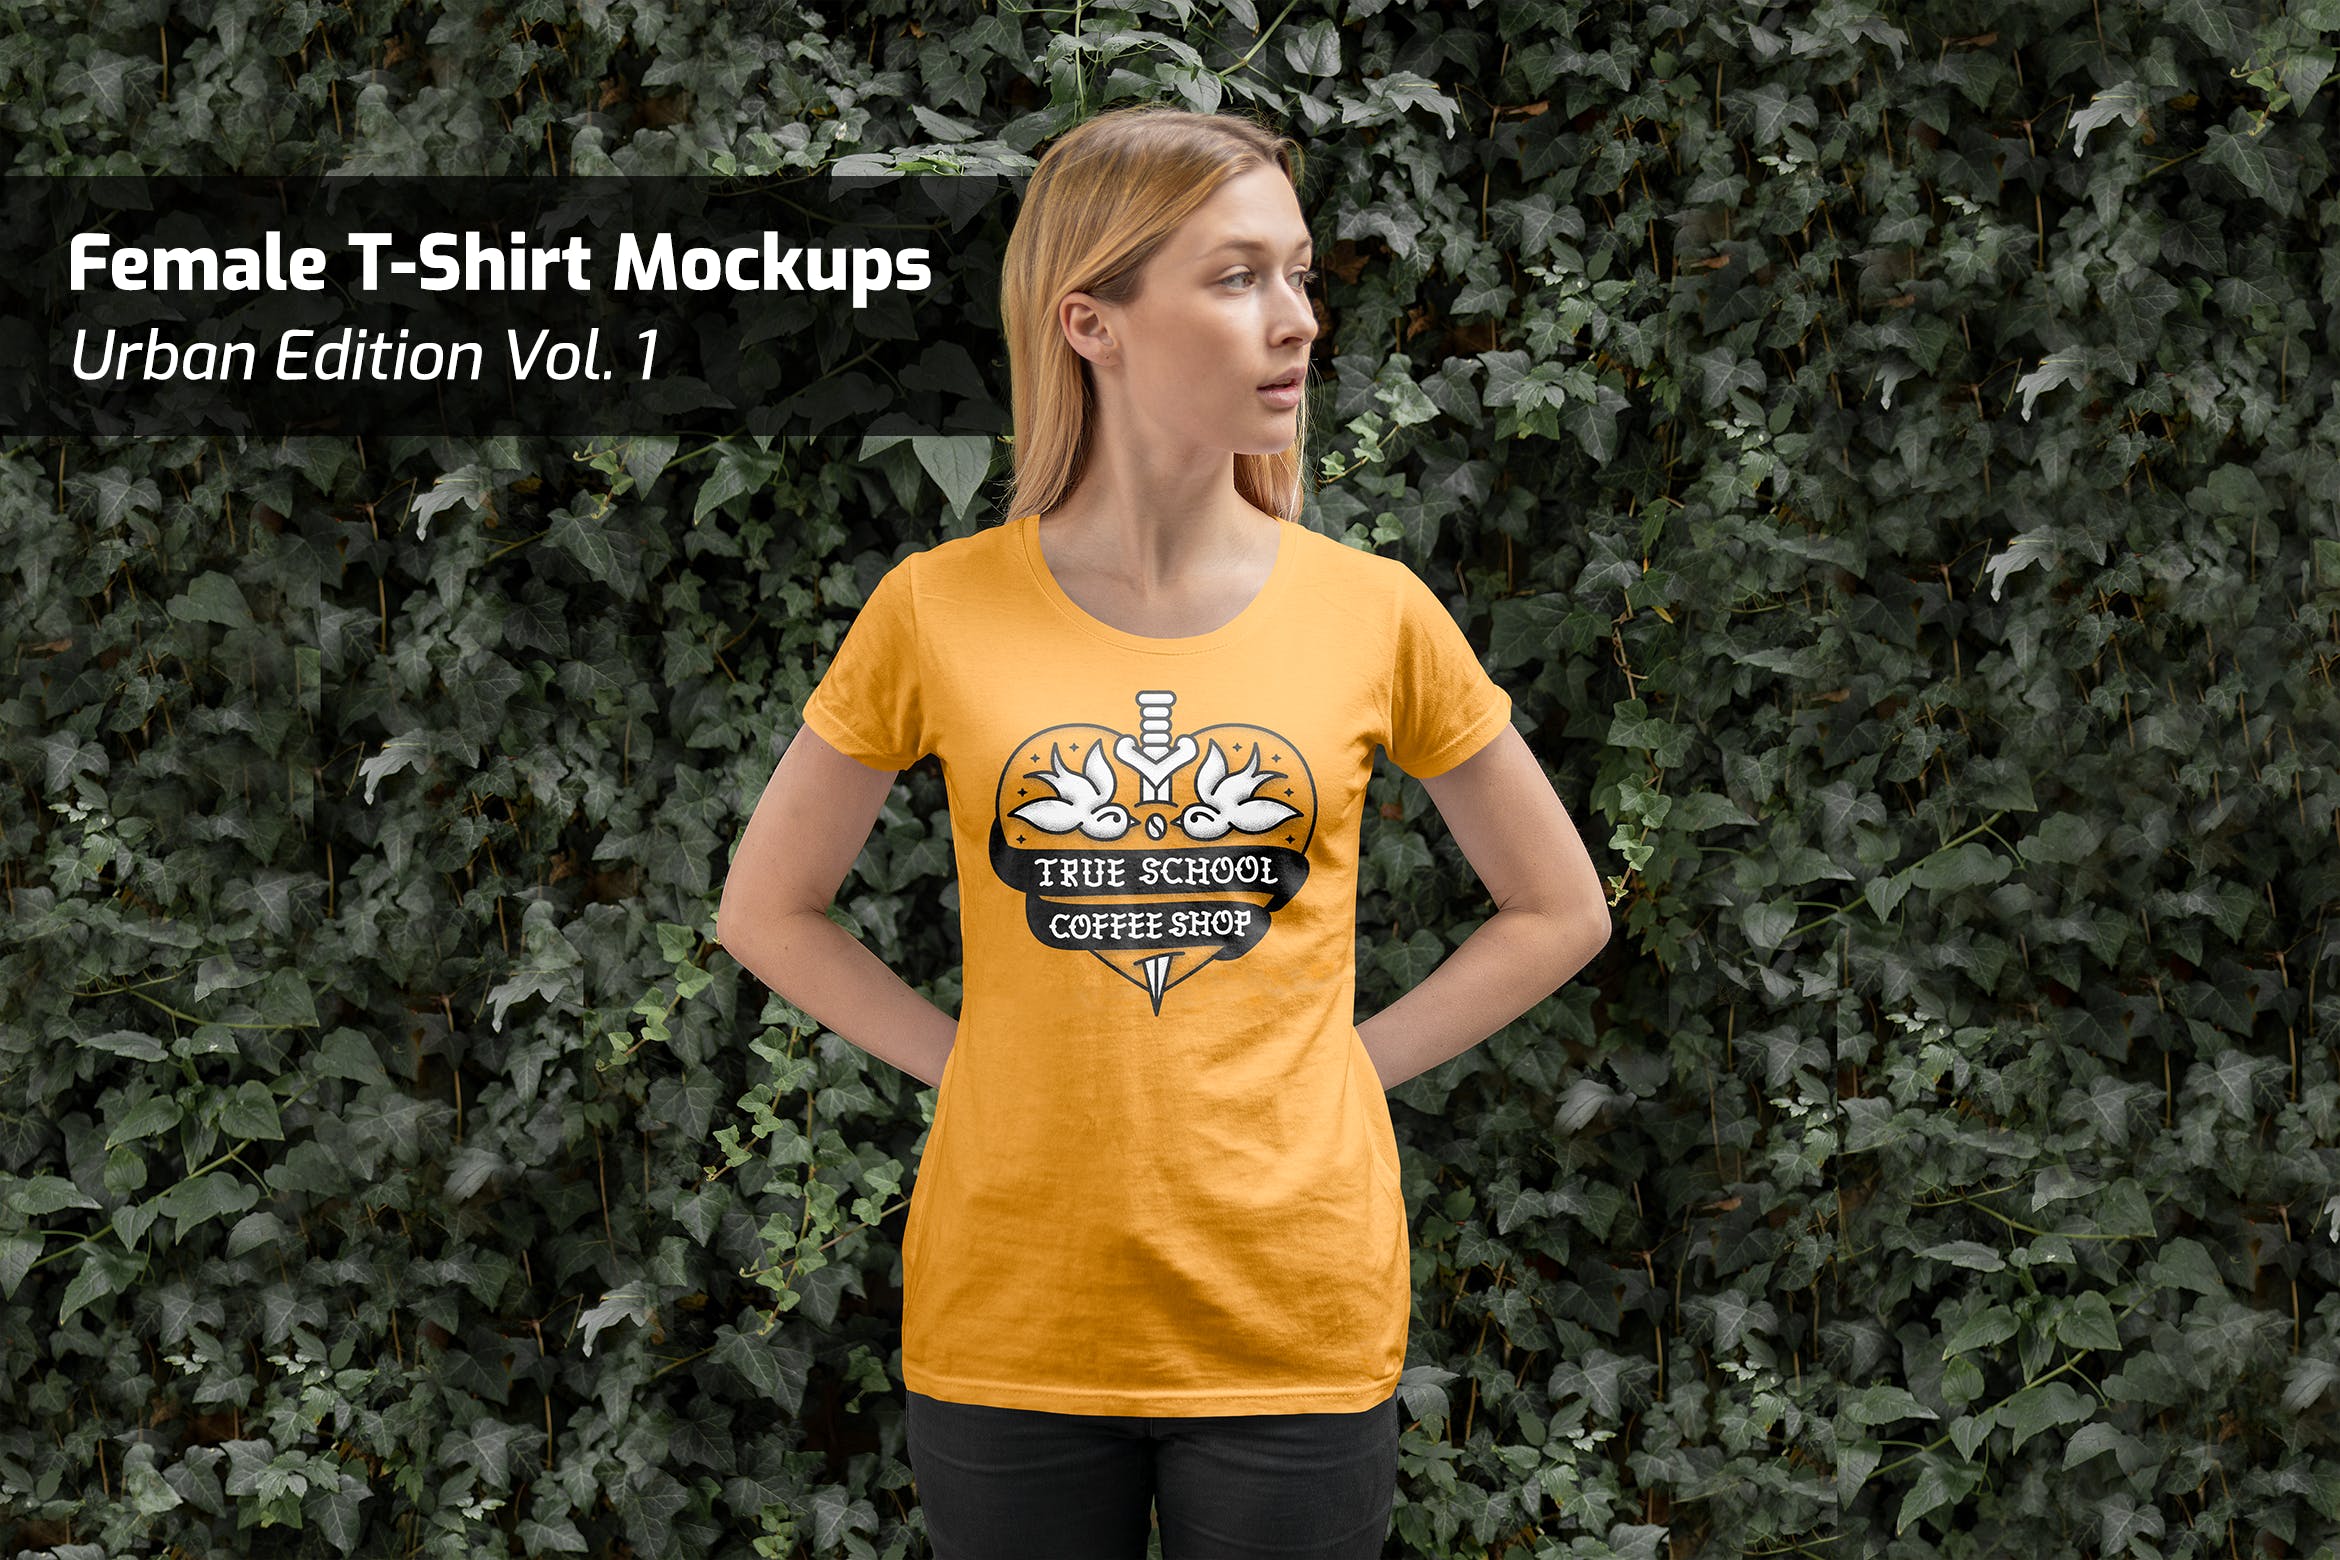 女士印花T恤外观设计上身效果图样机v1 Female T-Shirt Mockups Urban Edition Vol. 1插图